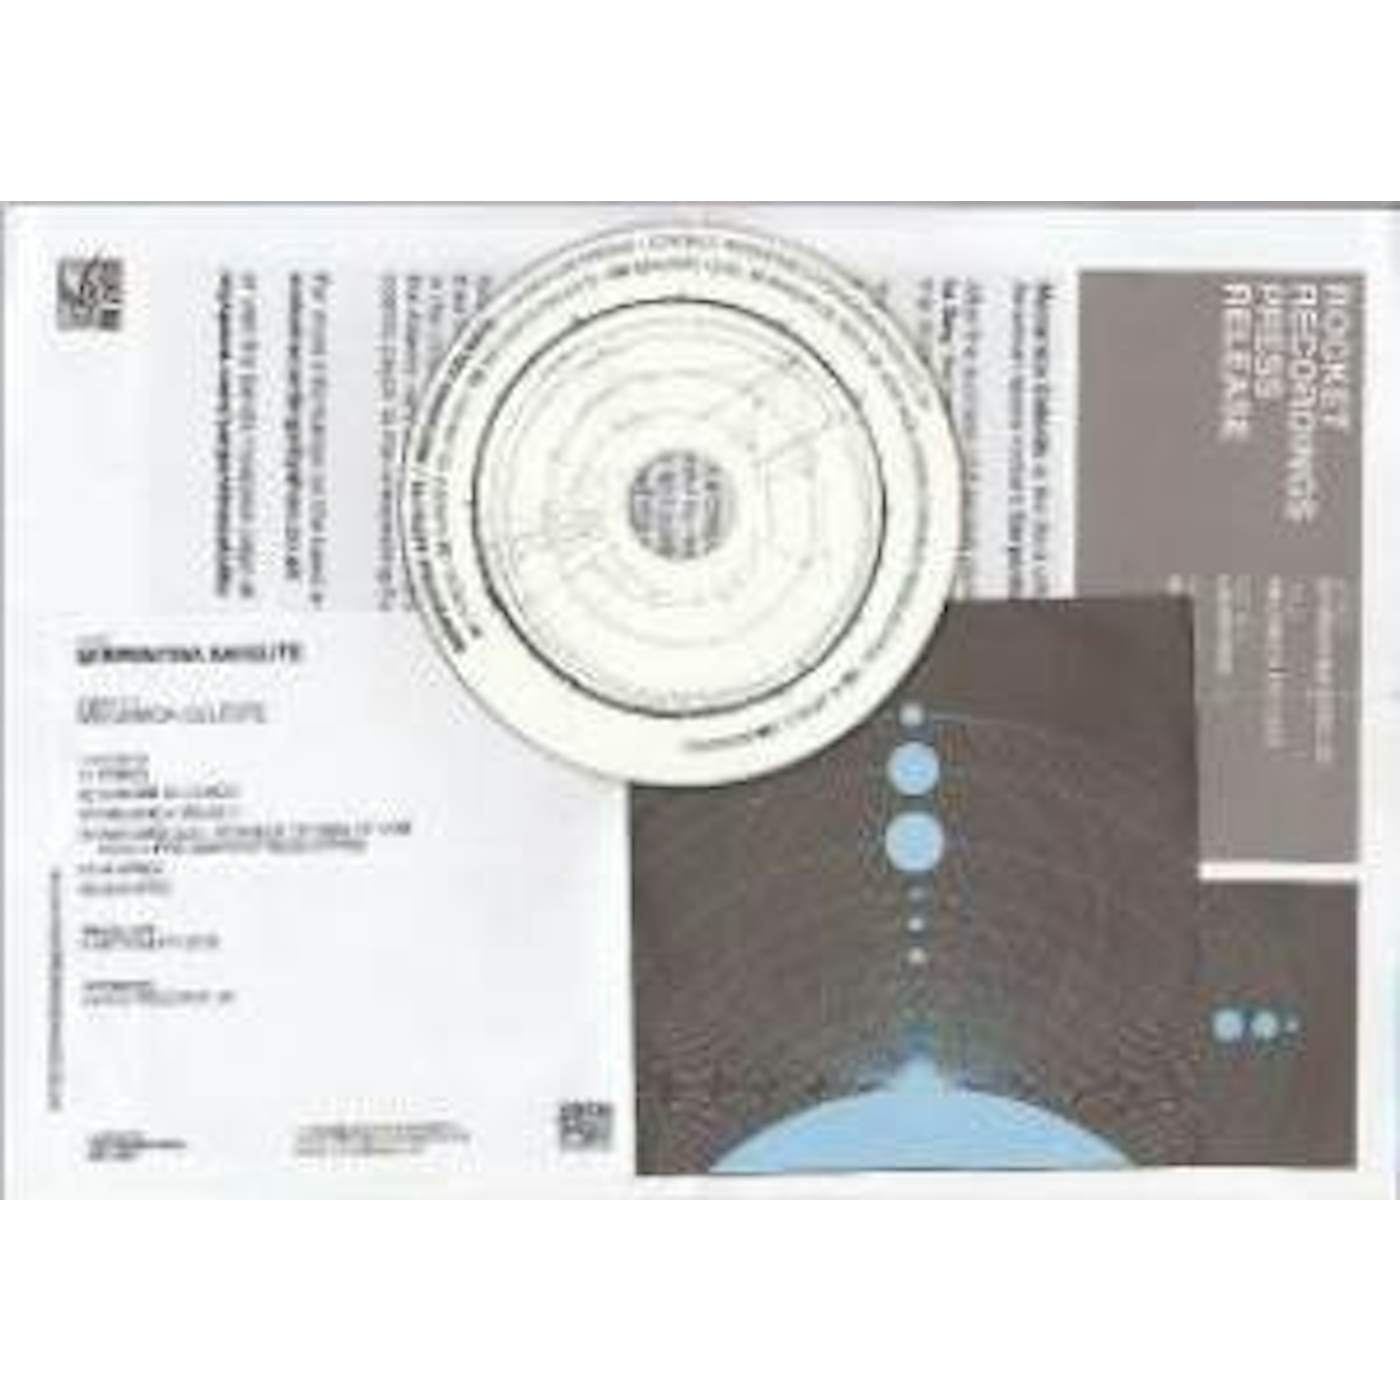 Serpentina Mecanica Celeste Vinyl Record